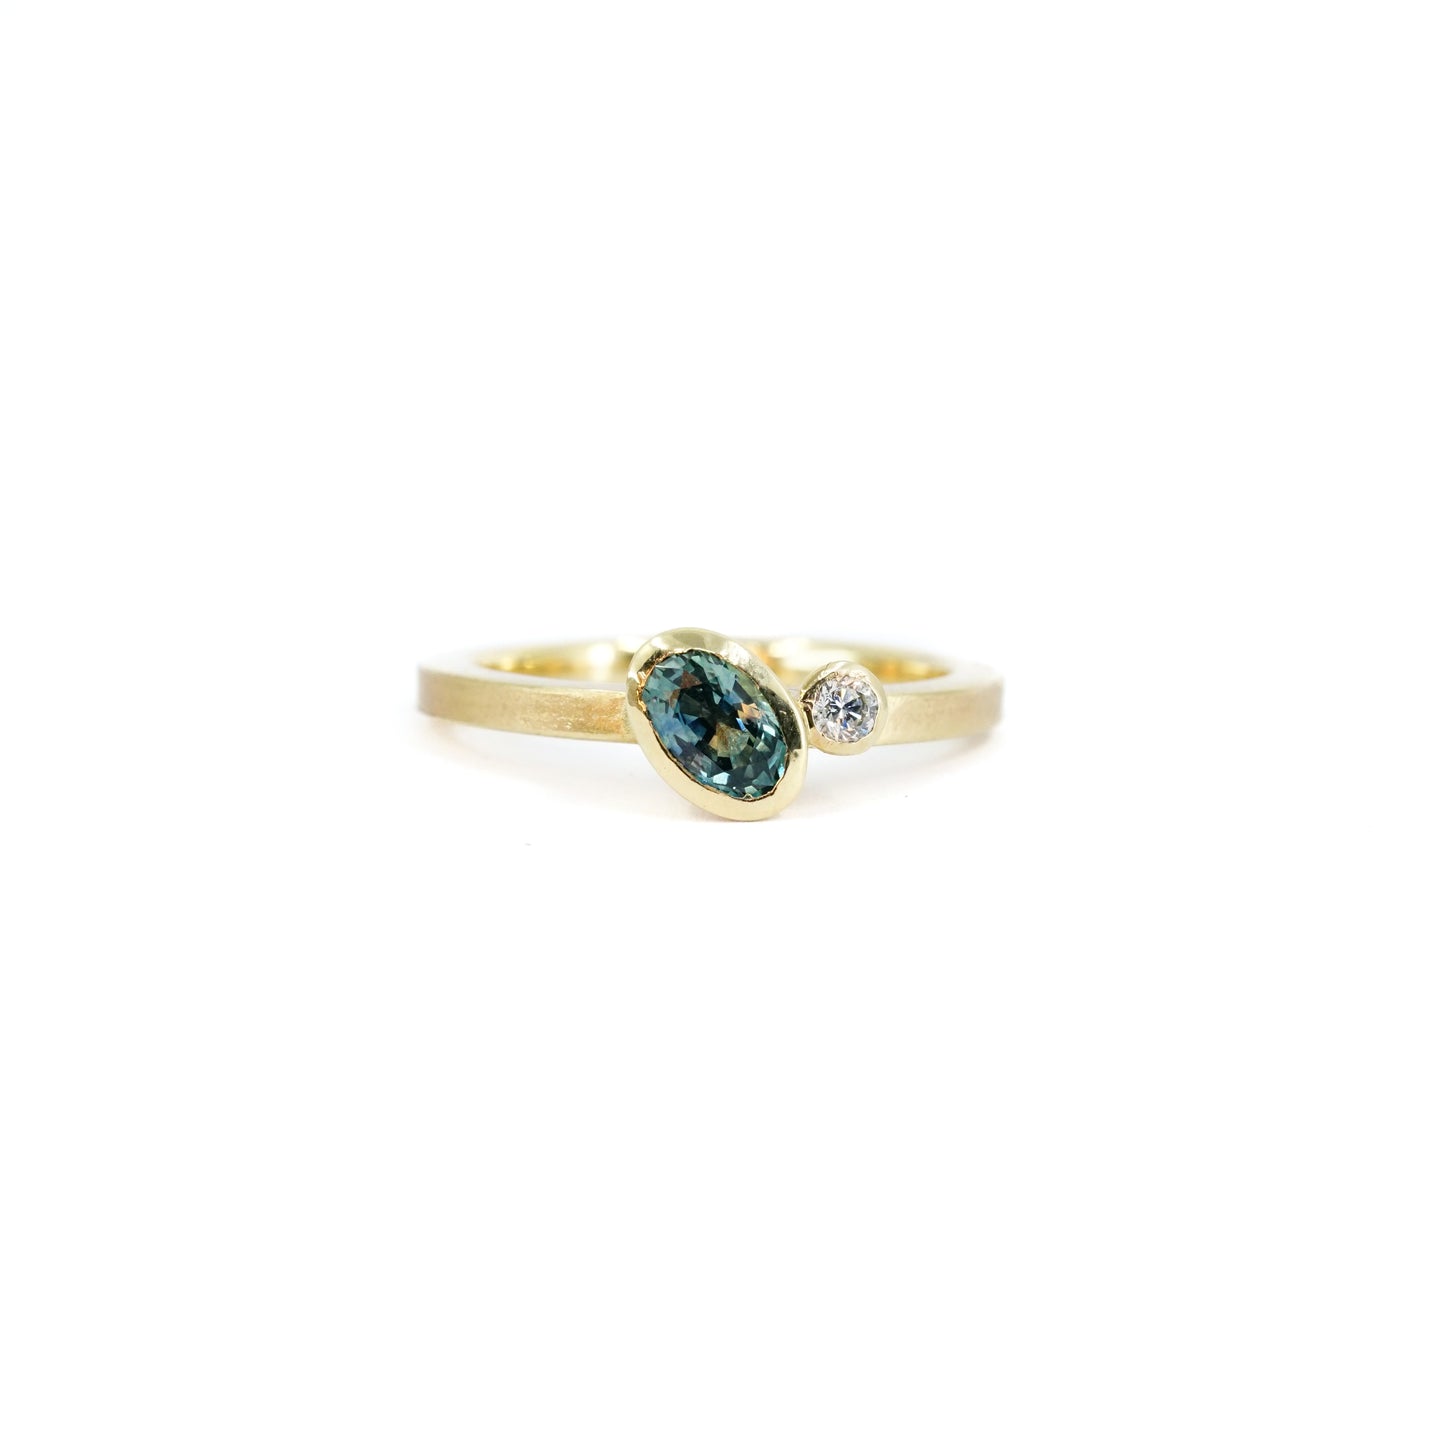 Asymmetric Teal Sapphire and Diamond Ring